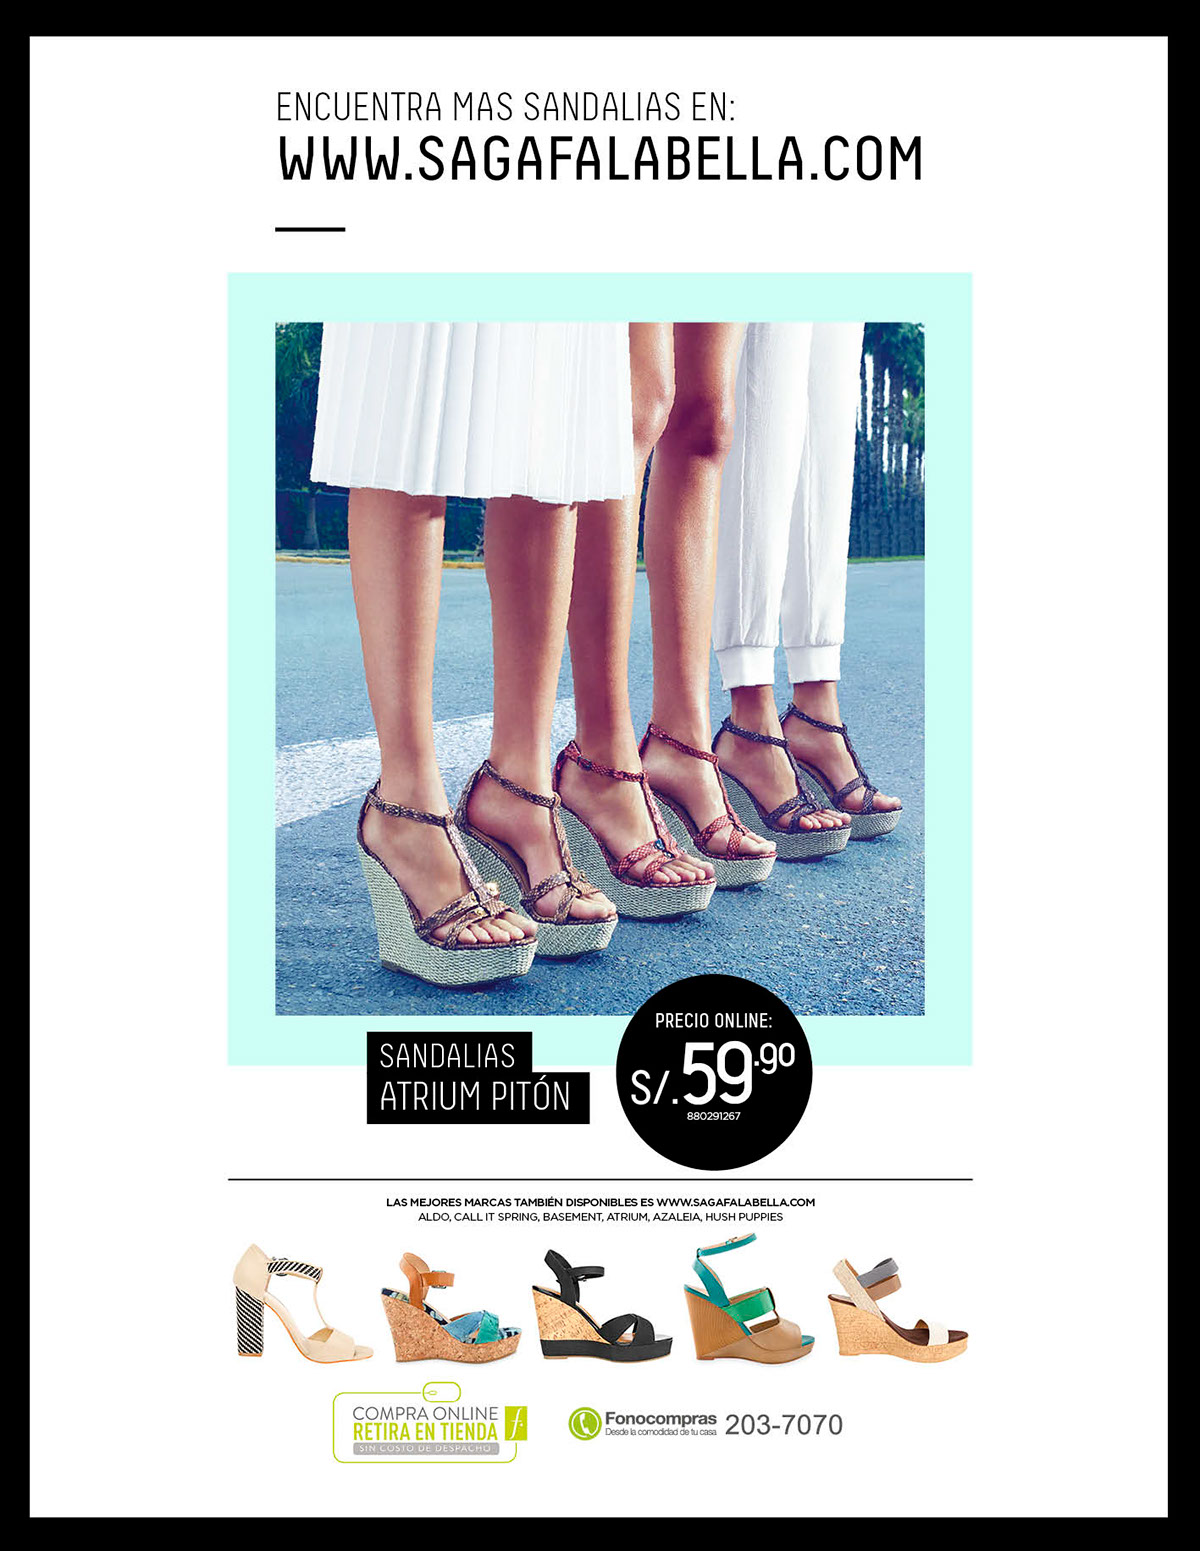 saga falabella Retail Layout moda sandalias shoes